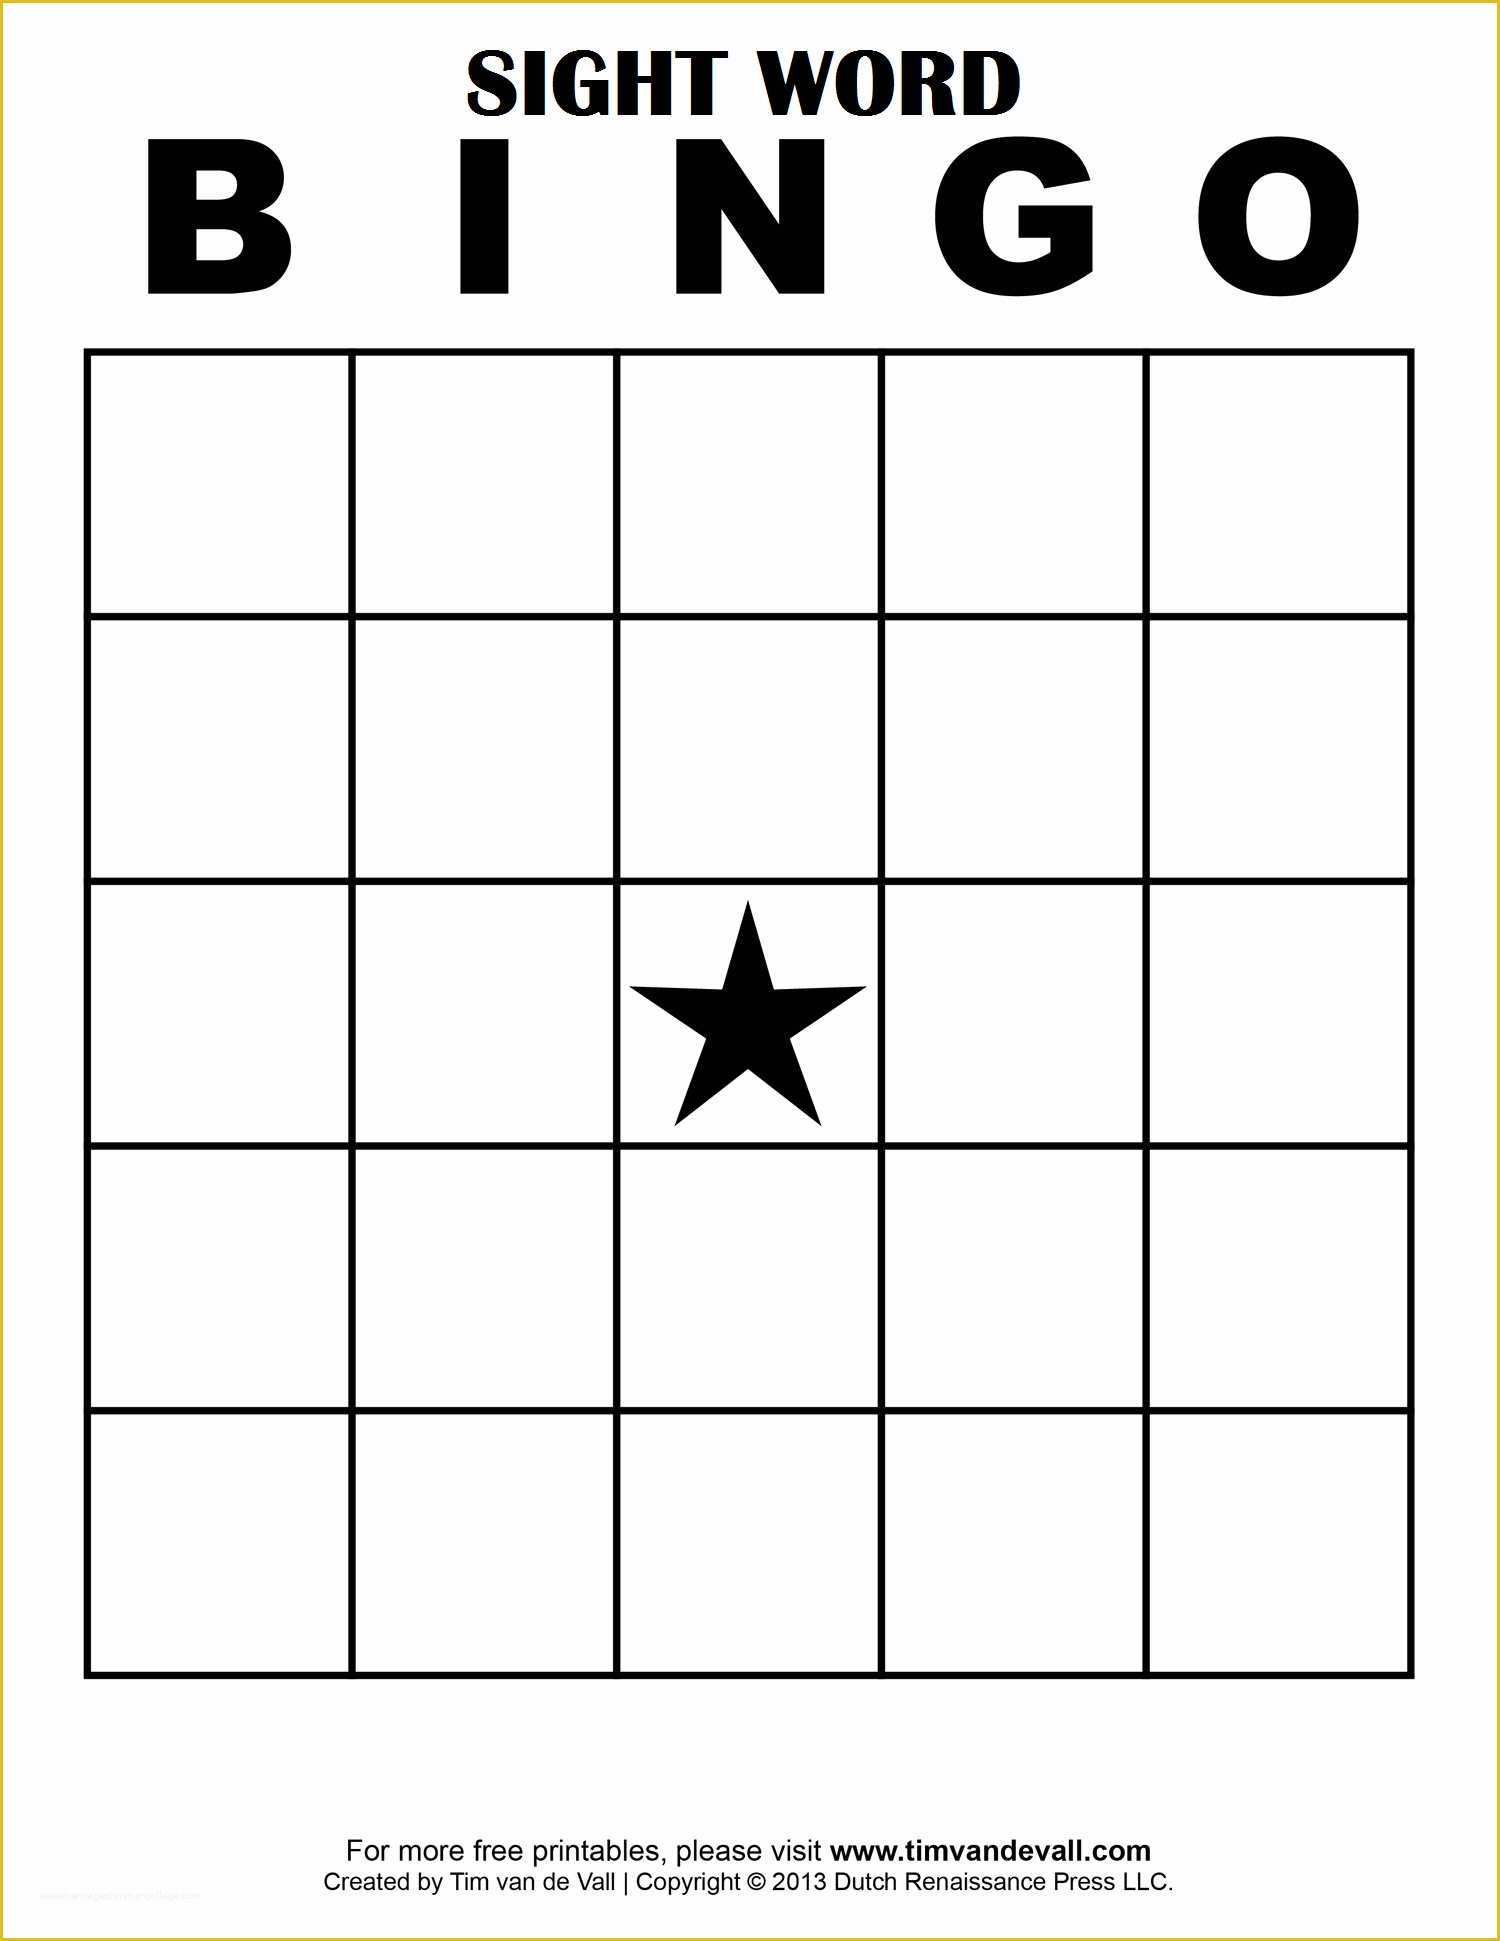 Bingo Card Template Free Of Sight Word Bingo … School Classroom Ideas